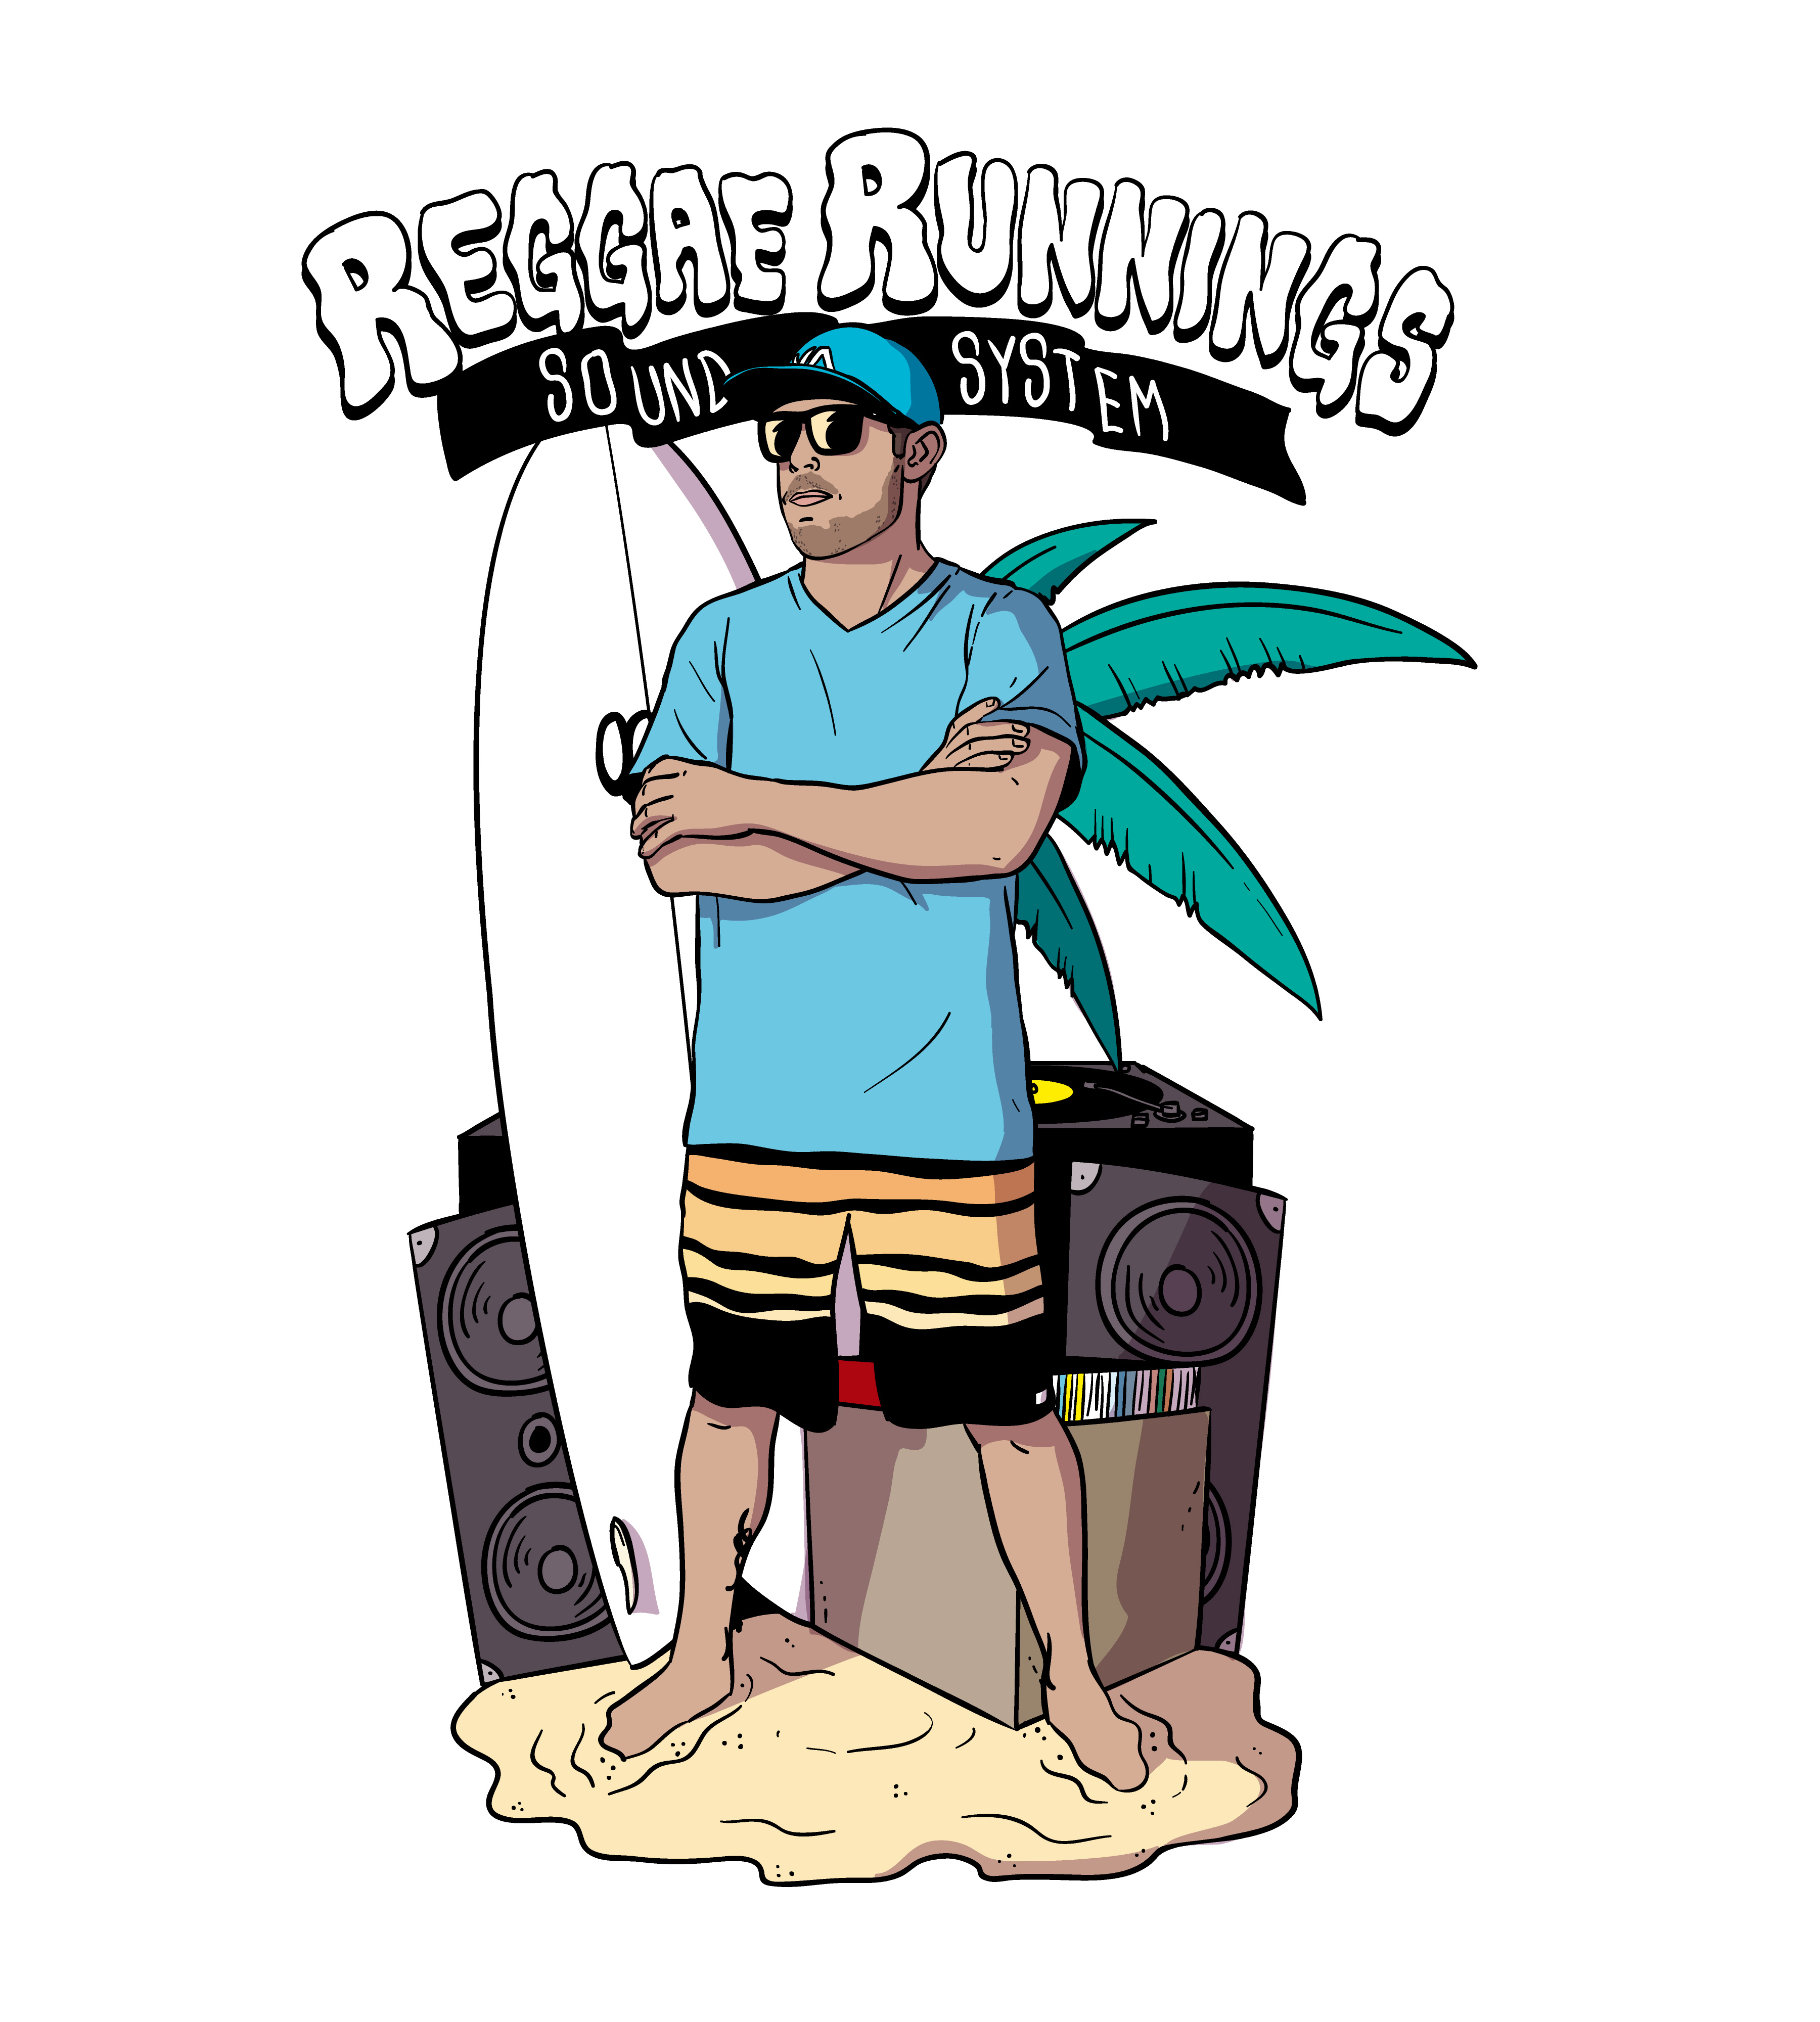 Reggae Runnings